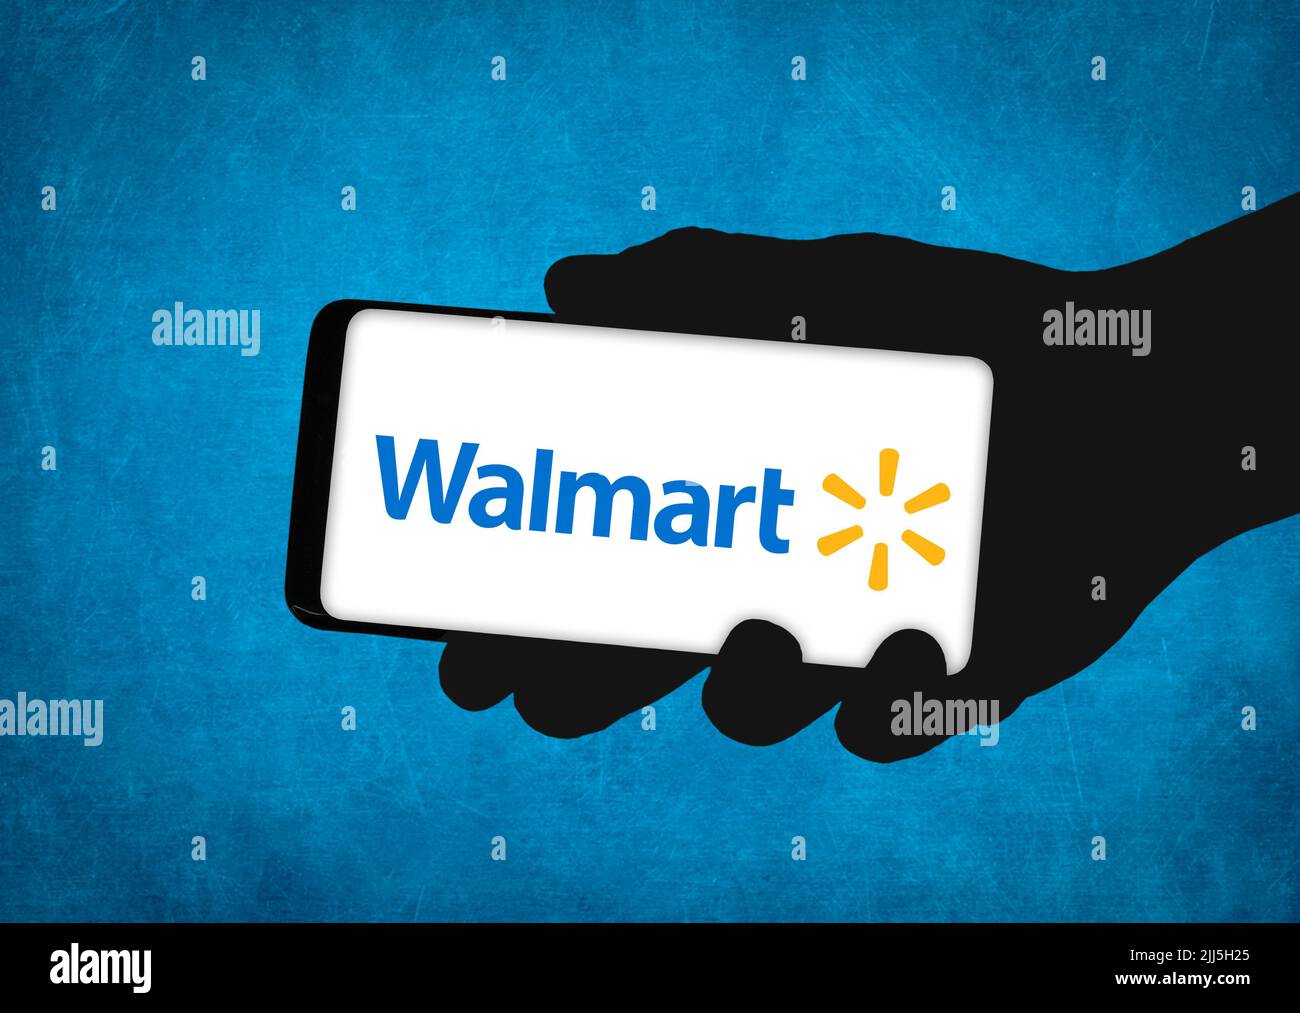 Walmart company logo on mobile device Stock Photo